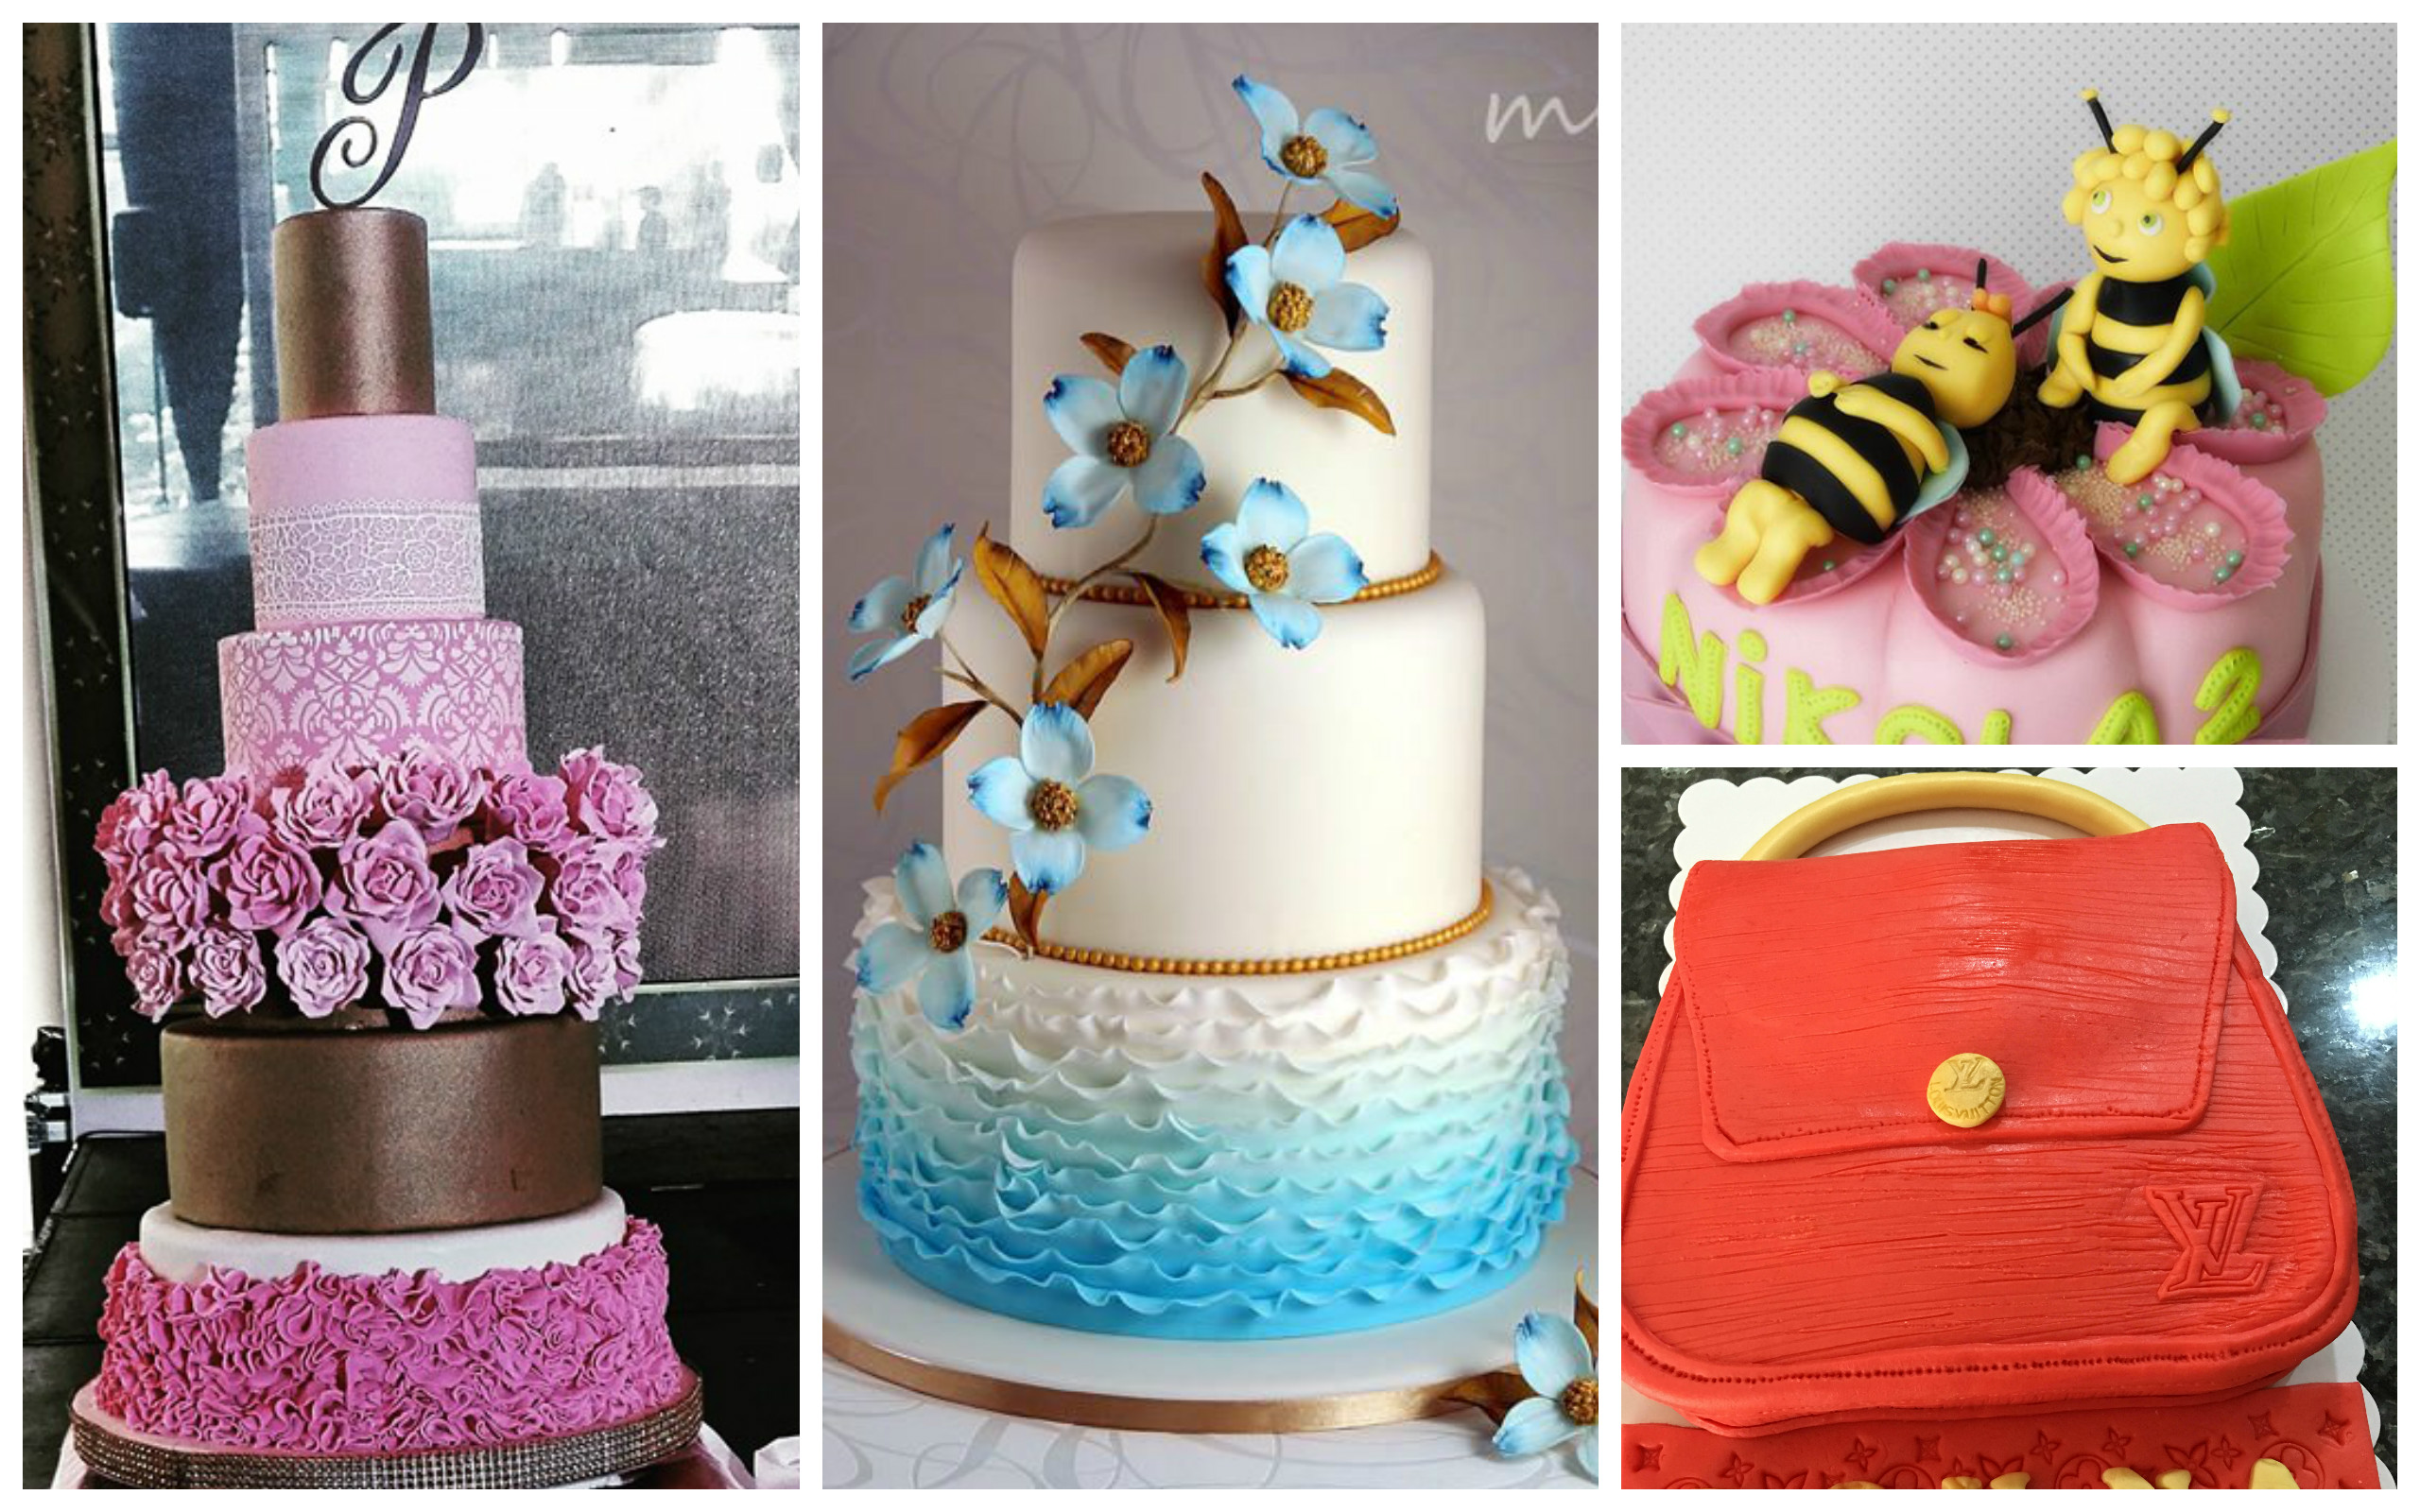 Top 10 Amazing Birthday Cake Tutorial Videos | Top Yummy Cake Decorating |  8 Indulgent Cake Recipes - YouTube